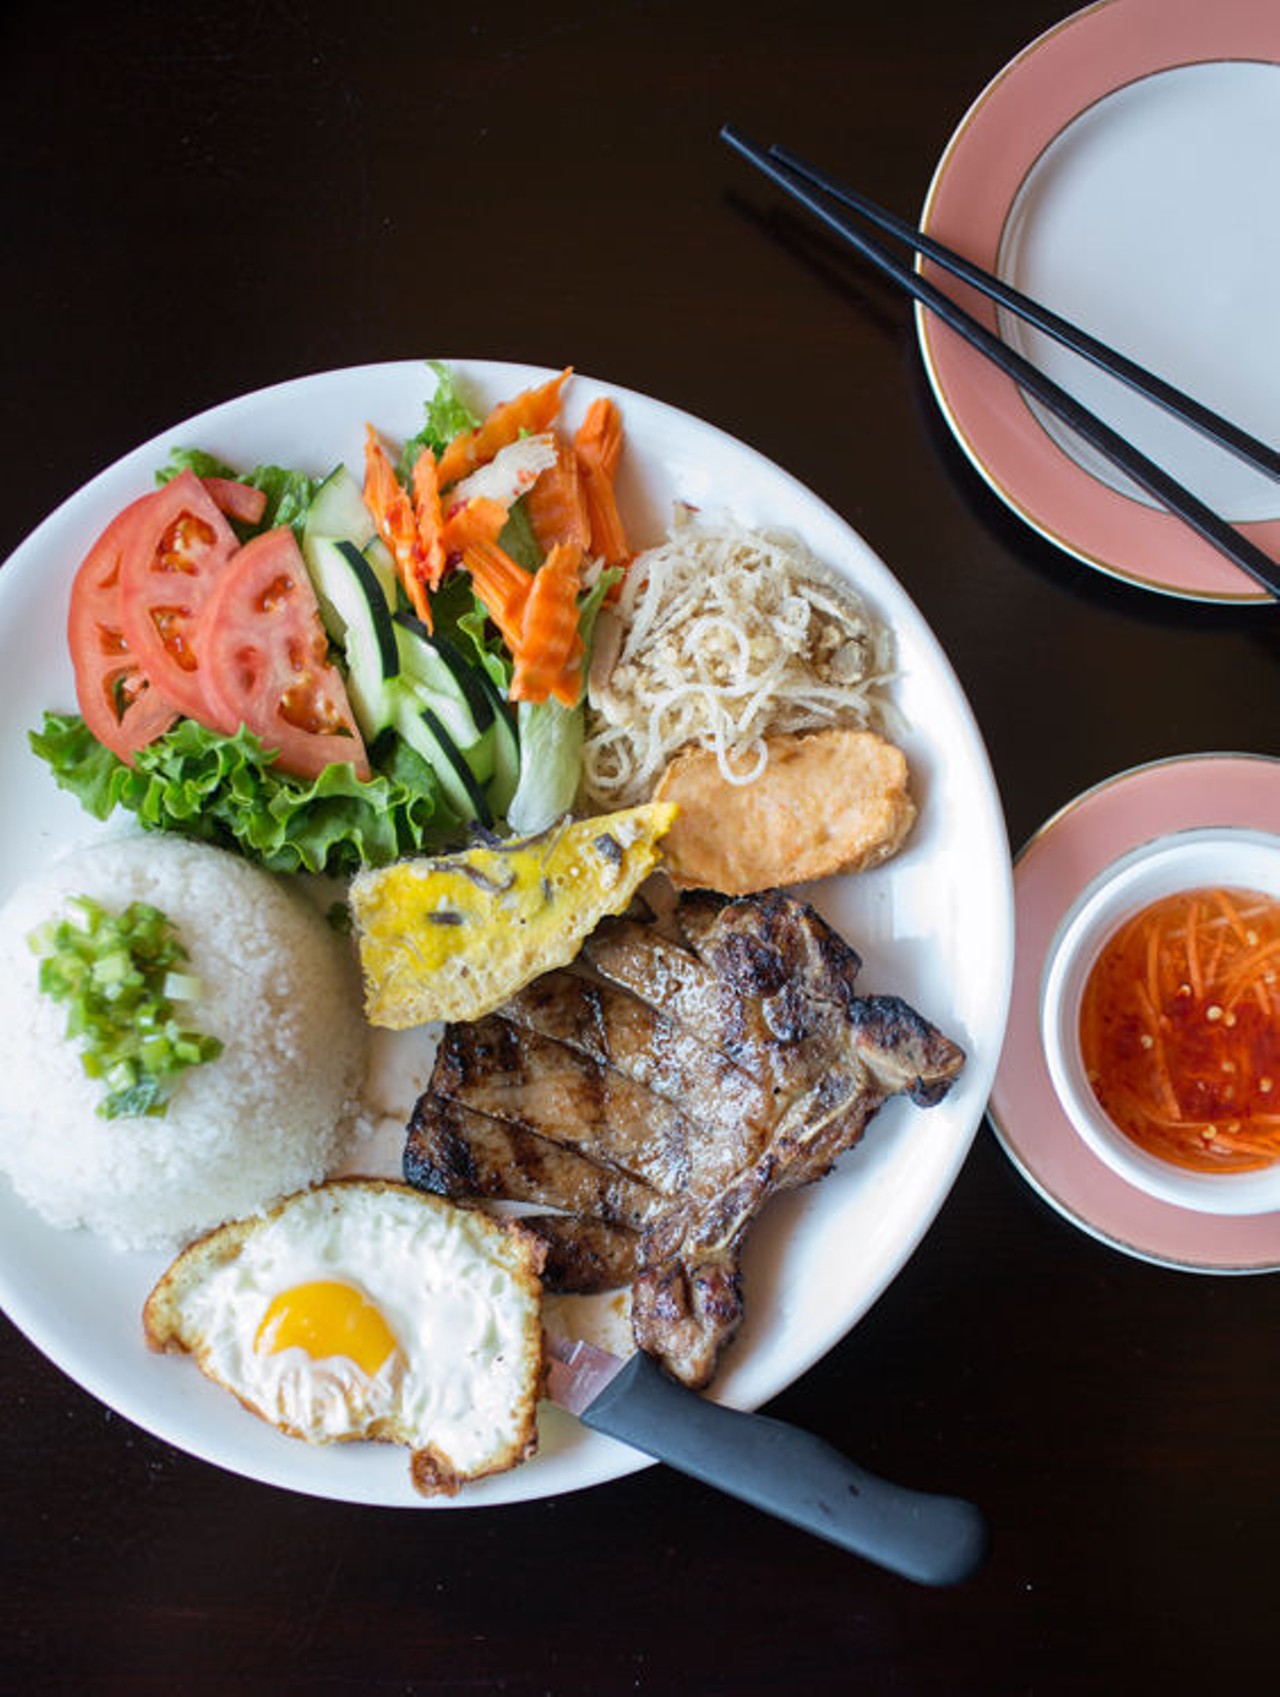 Mi Linh: The Tran family raises the bar for Vietnamese cuisine | Cafe ...